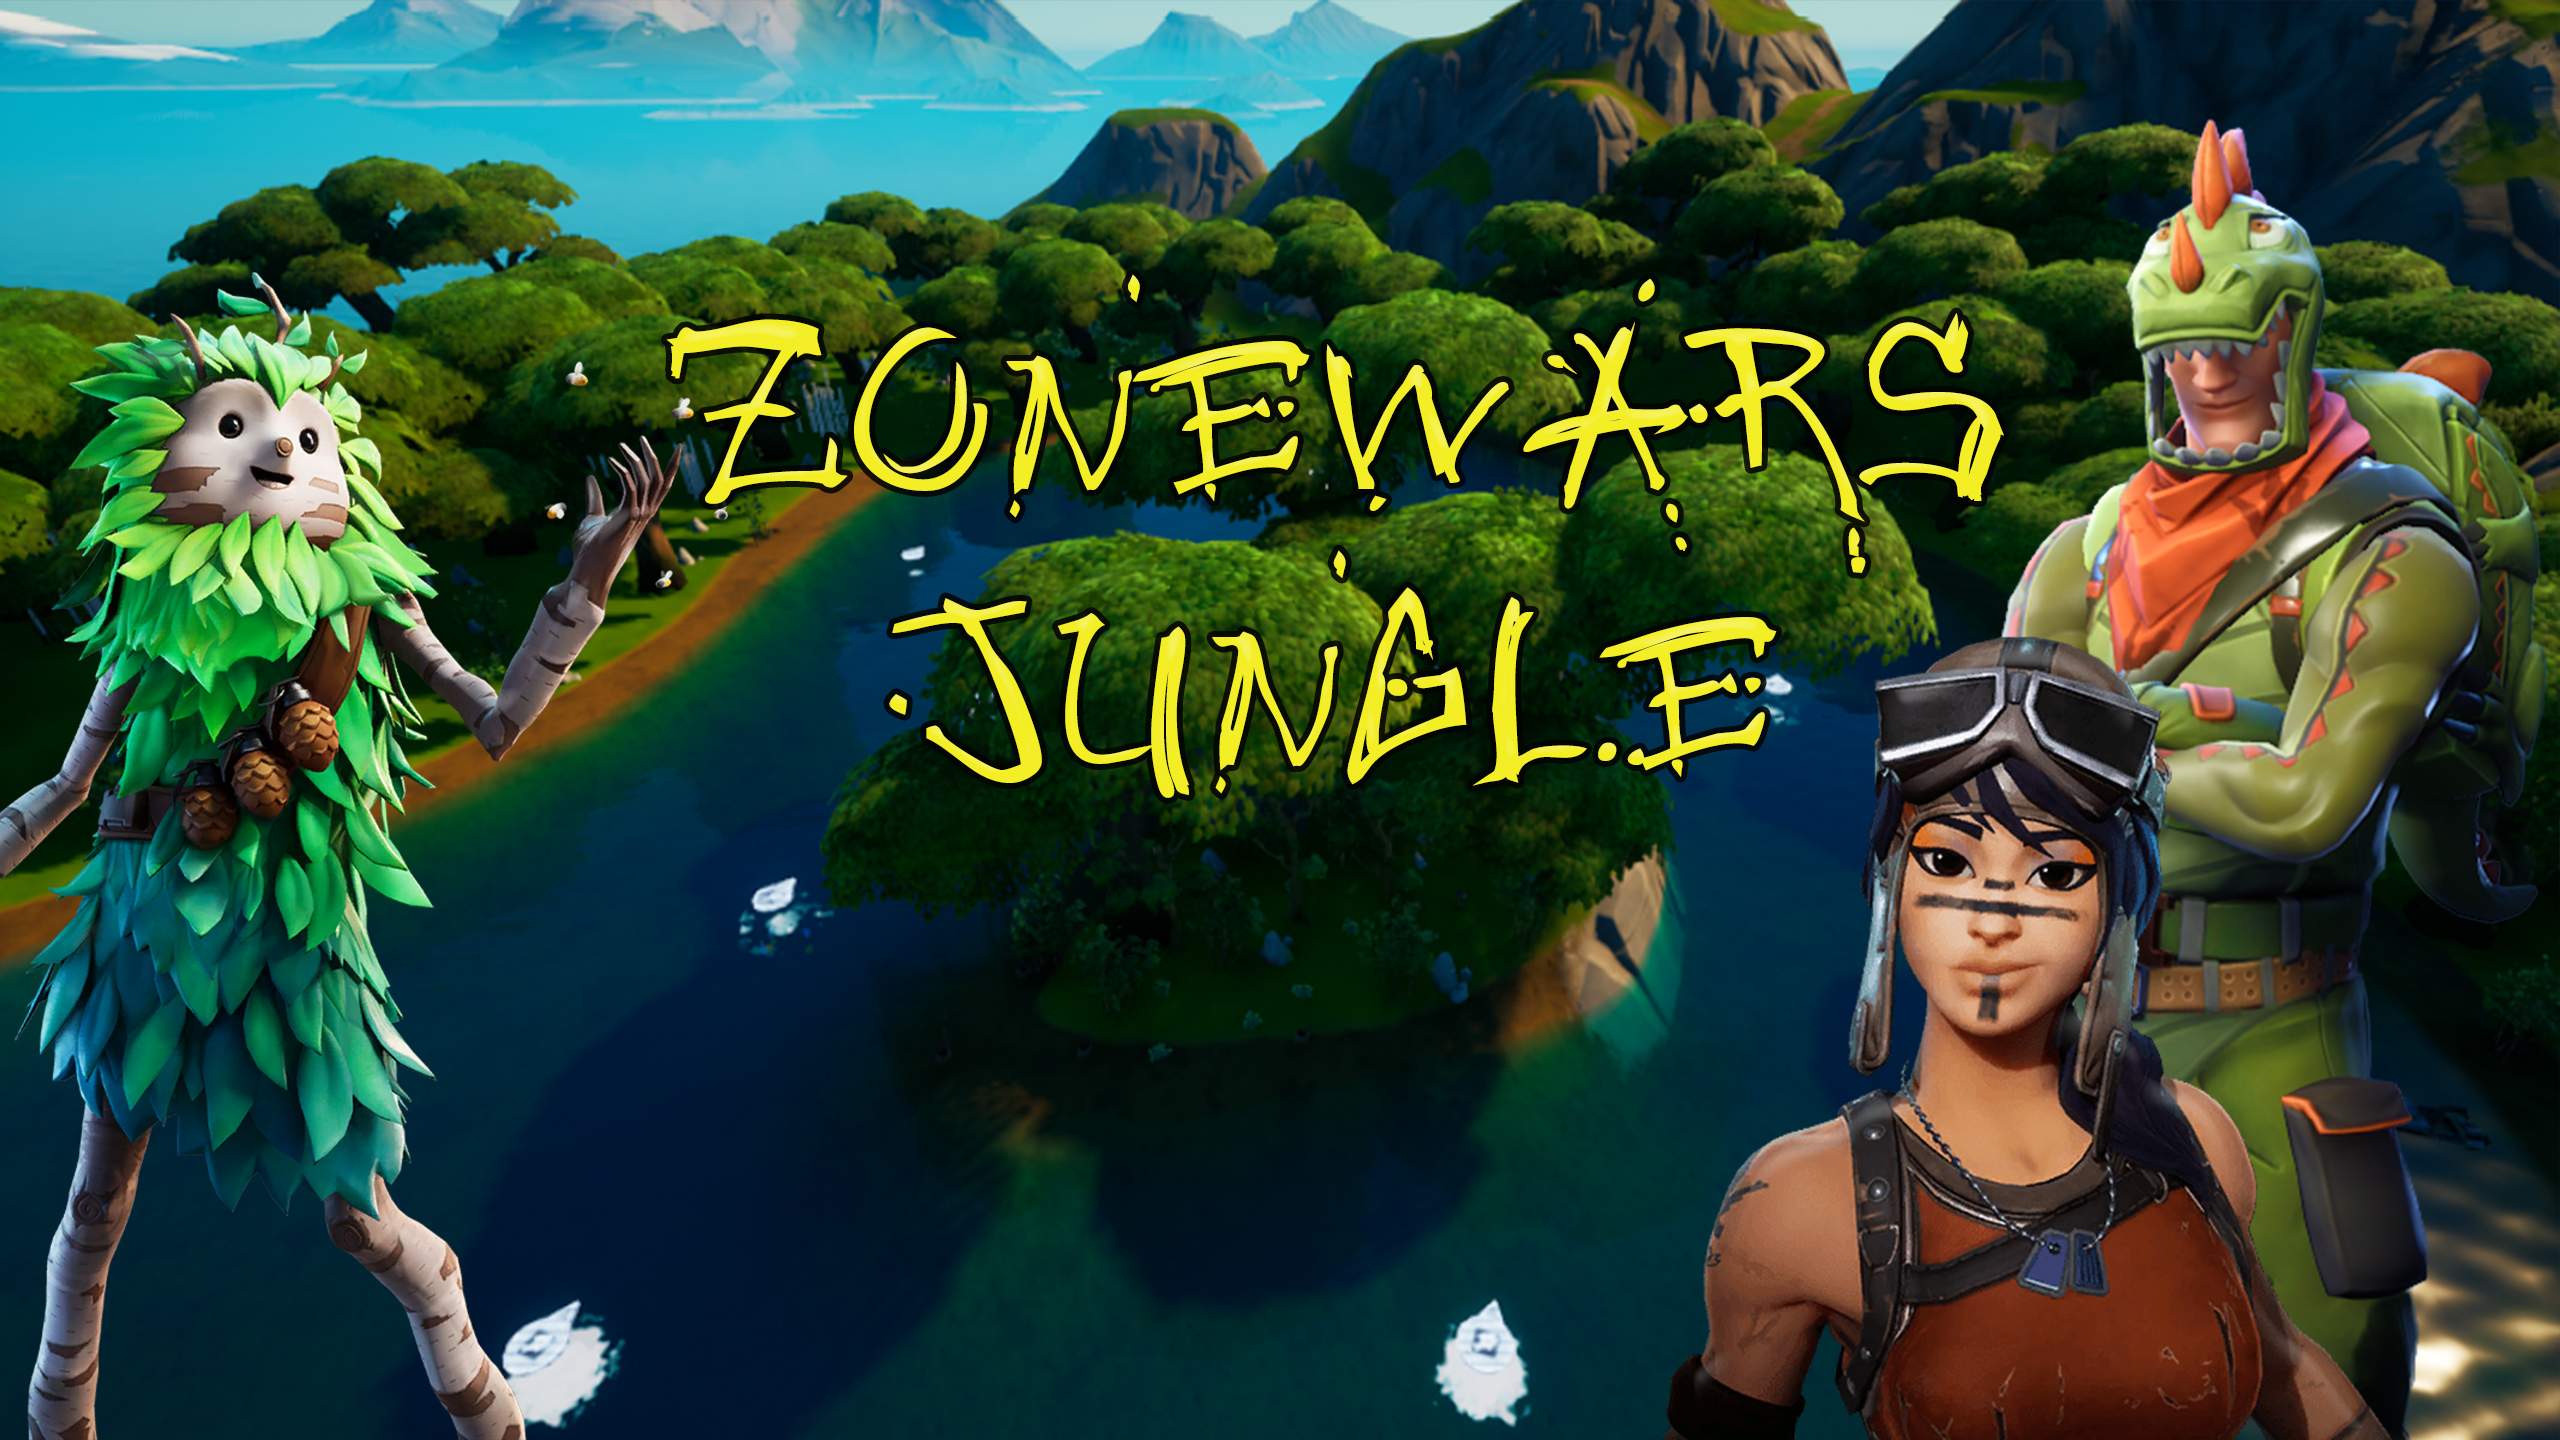 Zonewars Jungle